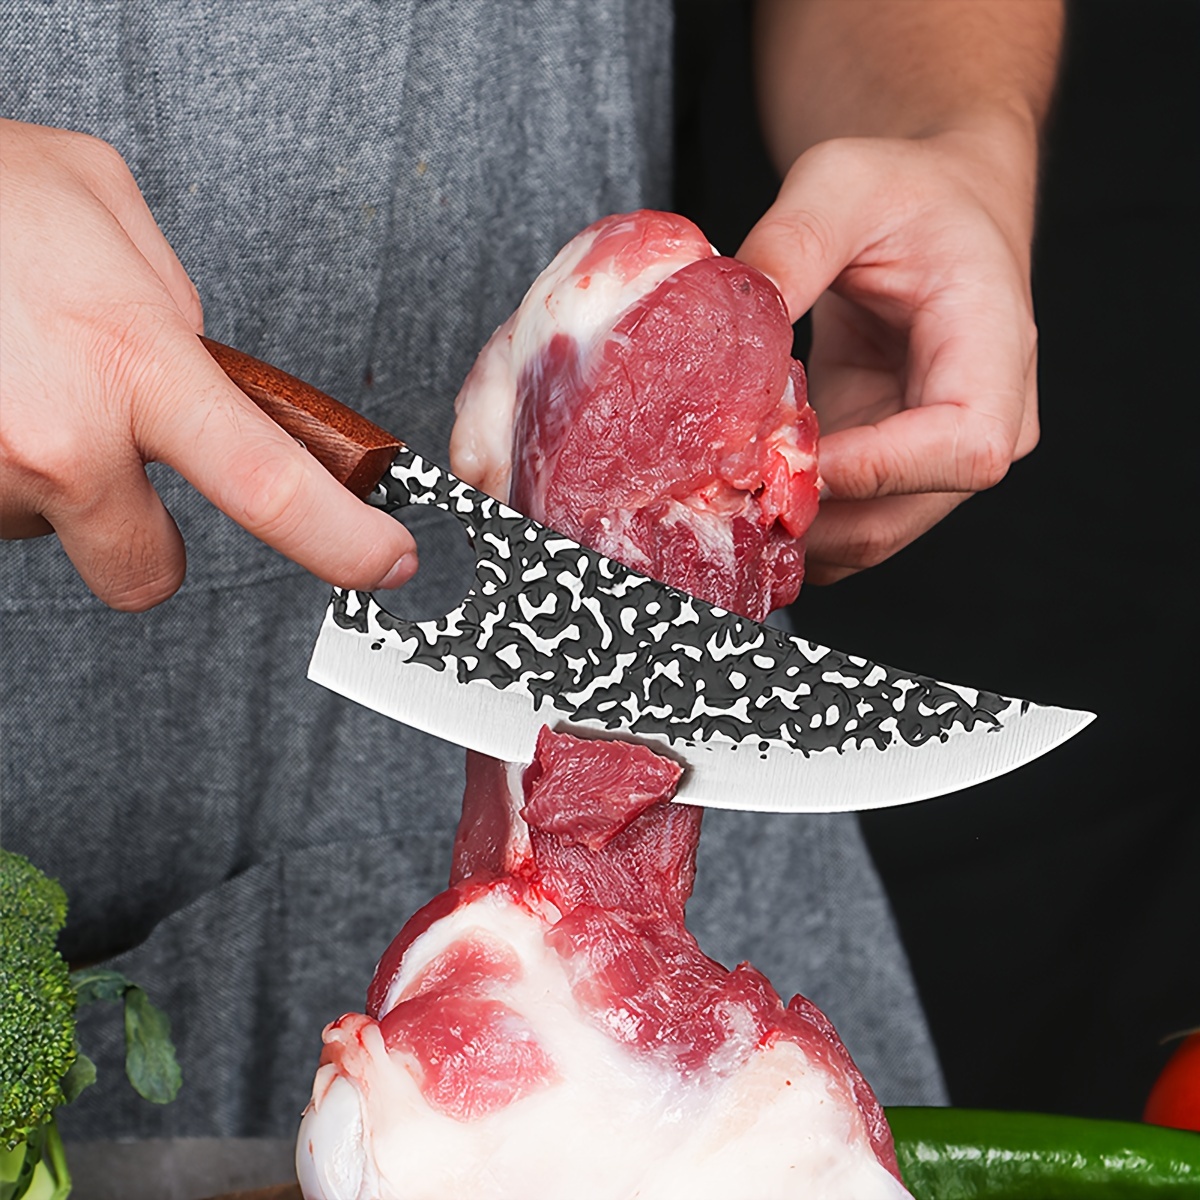 Cuchillo Japonés Para Cortar Carne, Cuchillo De Chef Forjado